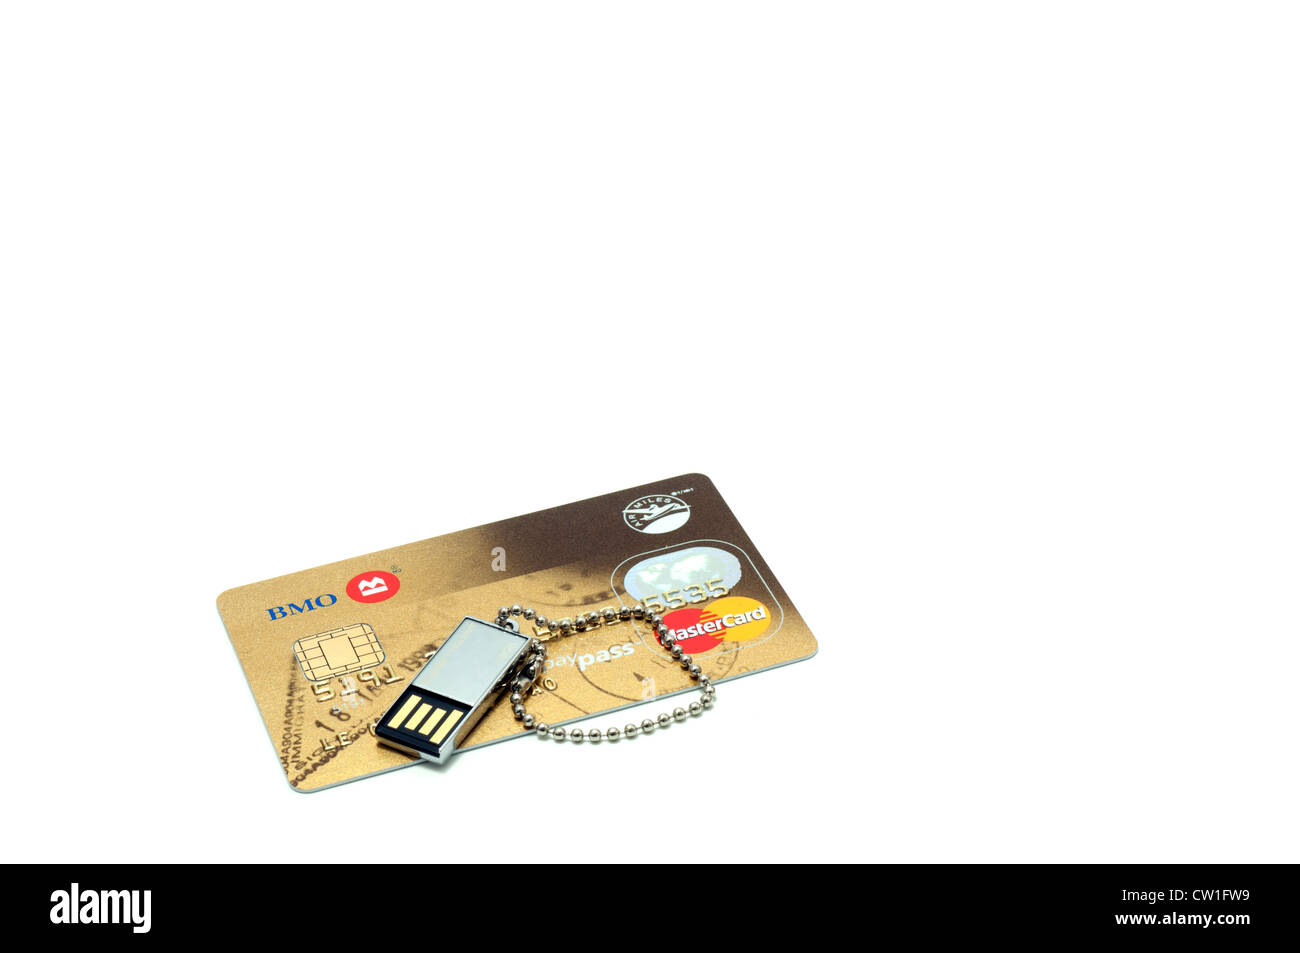 Kanadische BMO Bank of Montreal Gold Master Card Kreditkarte und einem USB-stick  Stockfotografie - Alamy